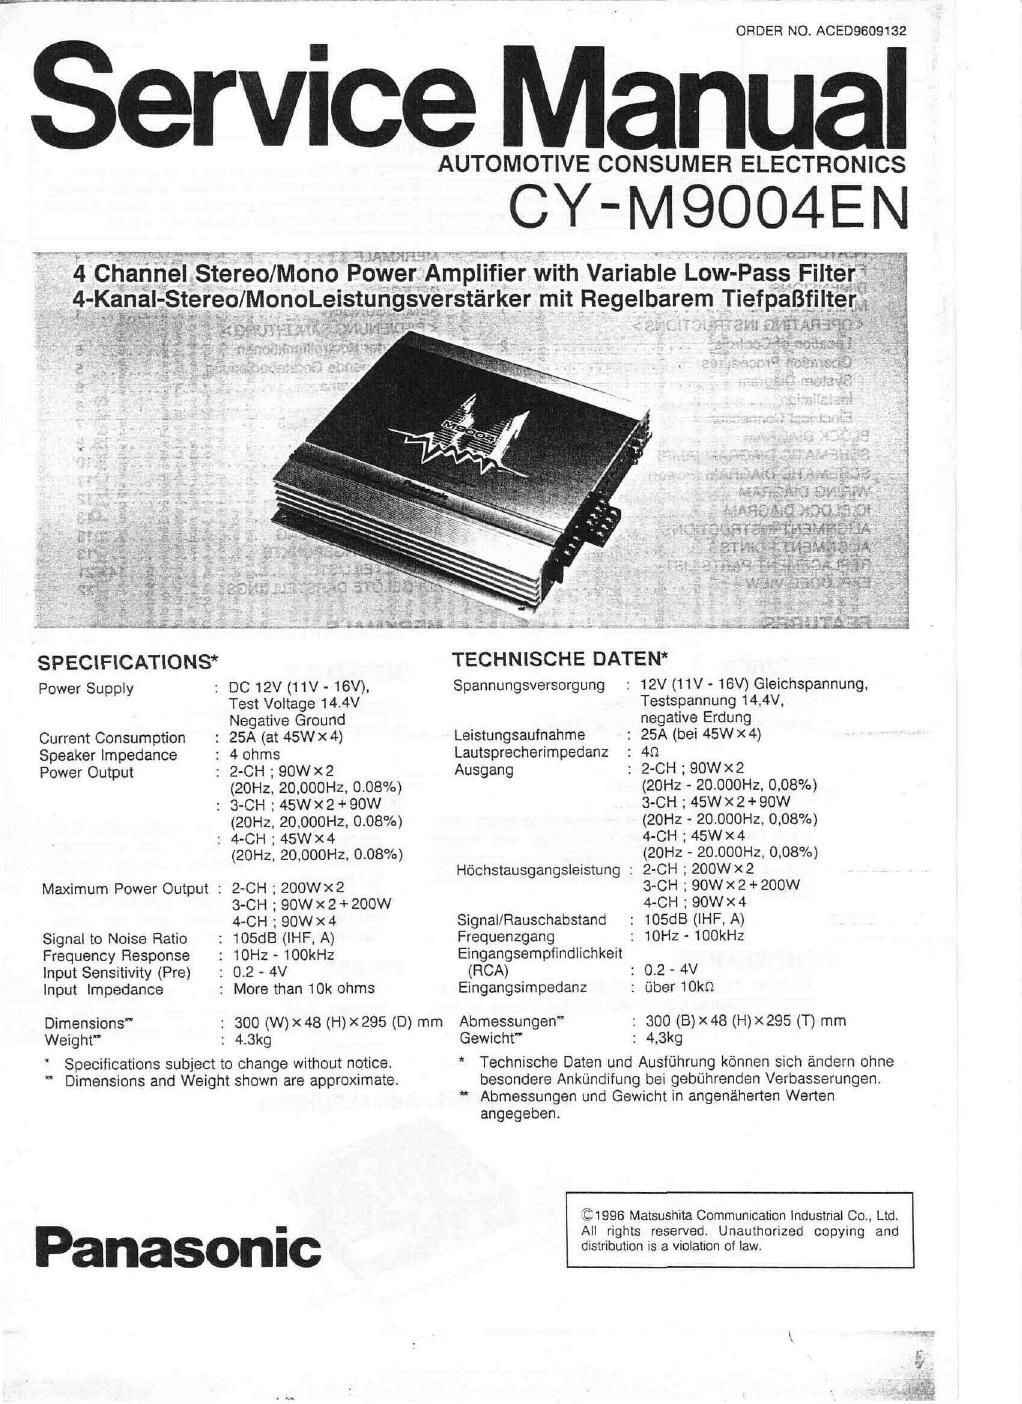 panasonic cy m 9000 en service manual